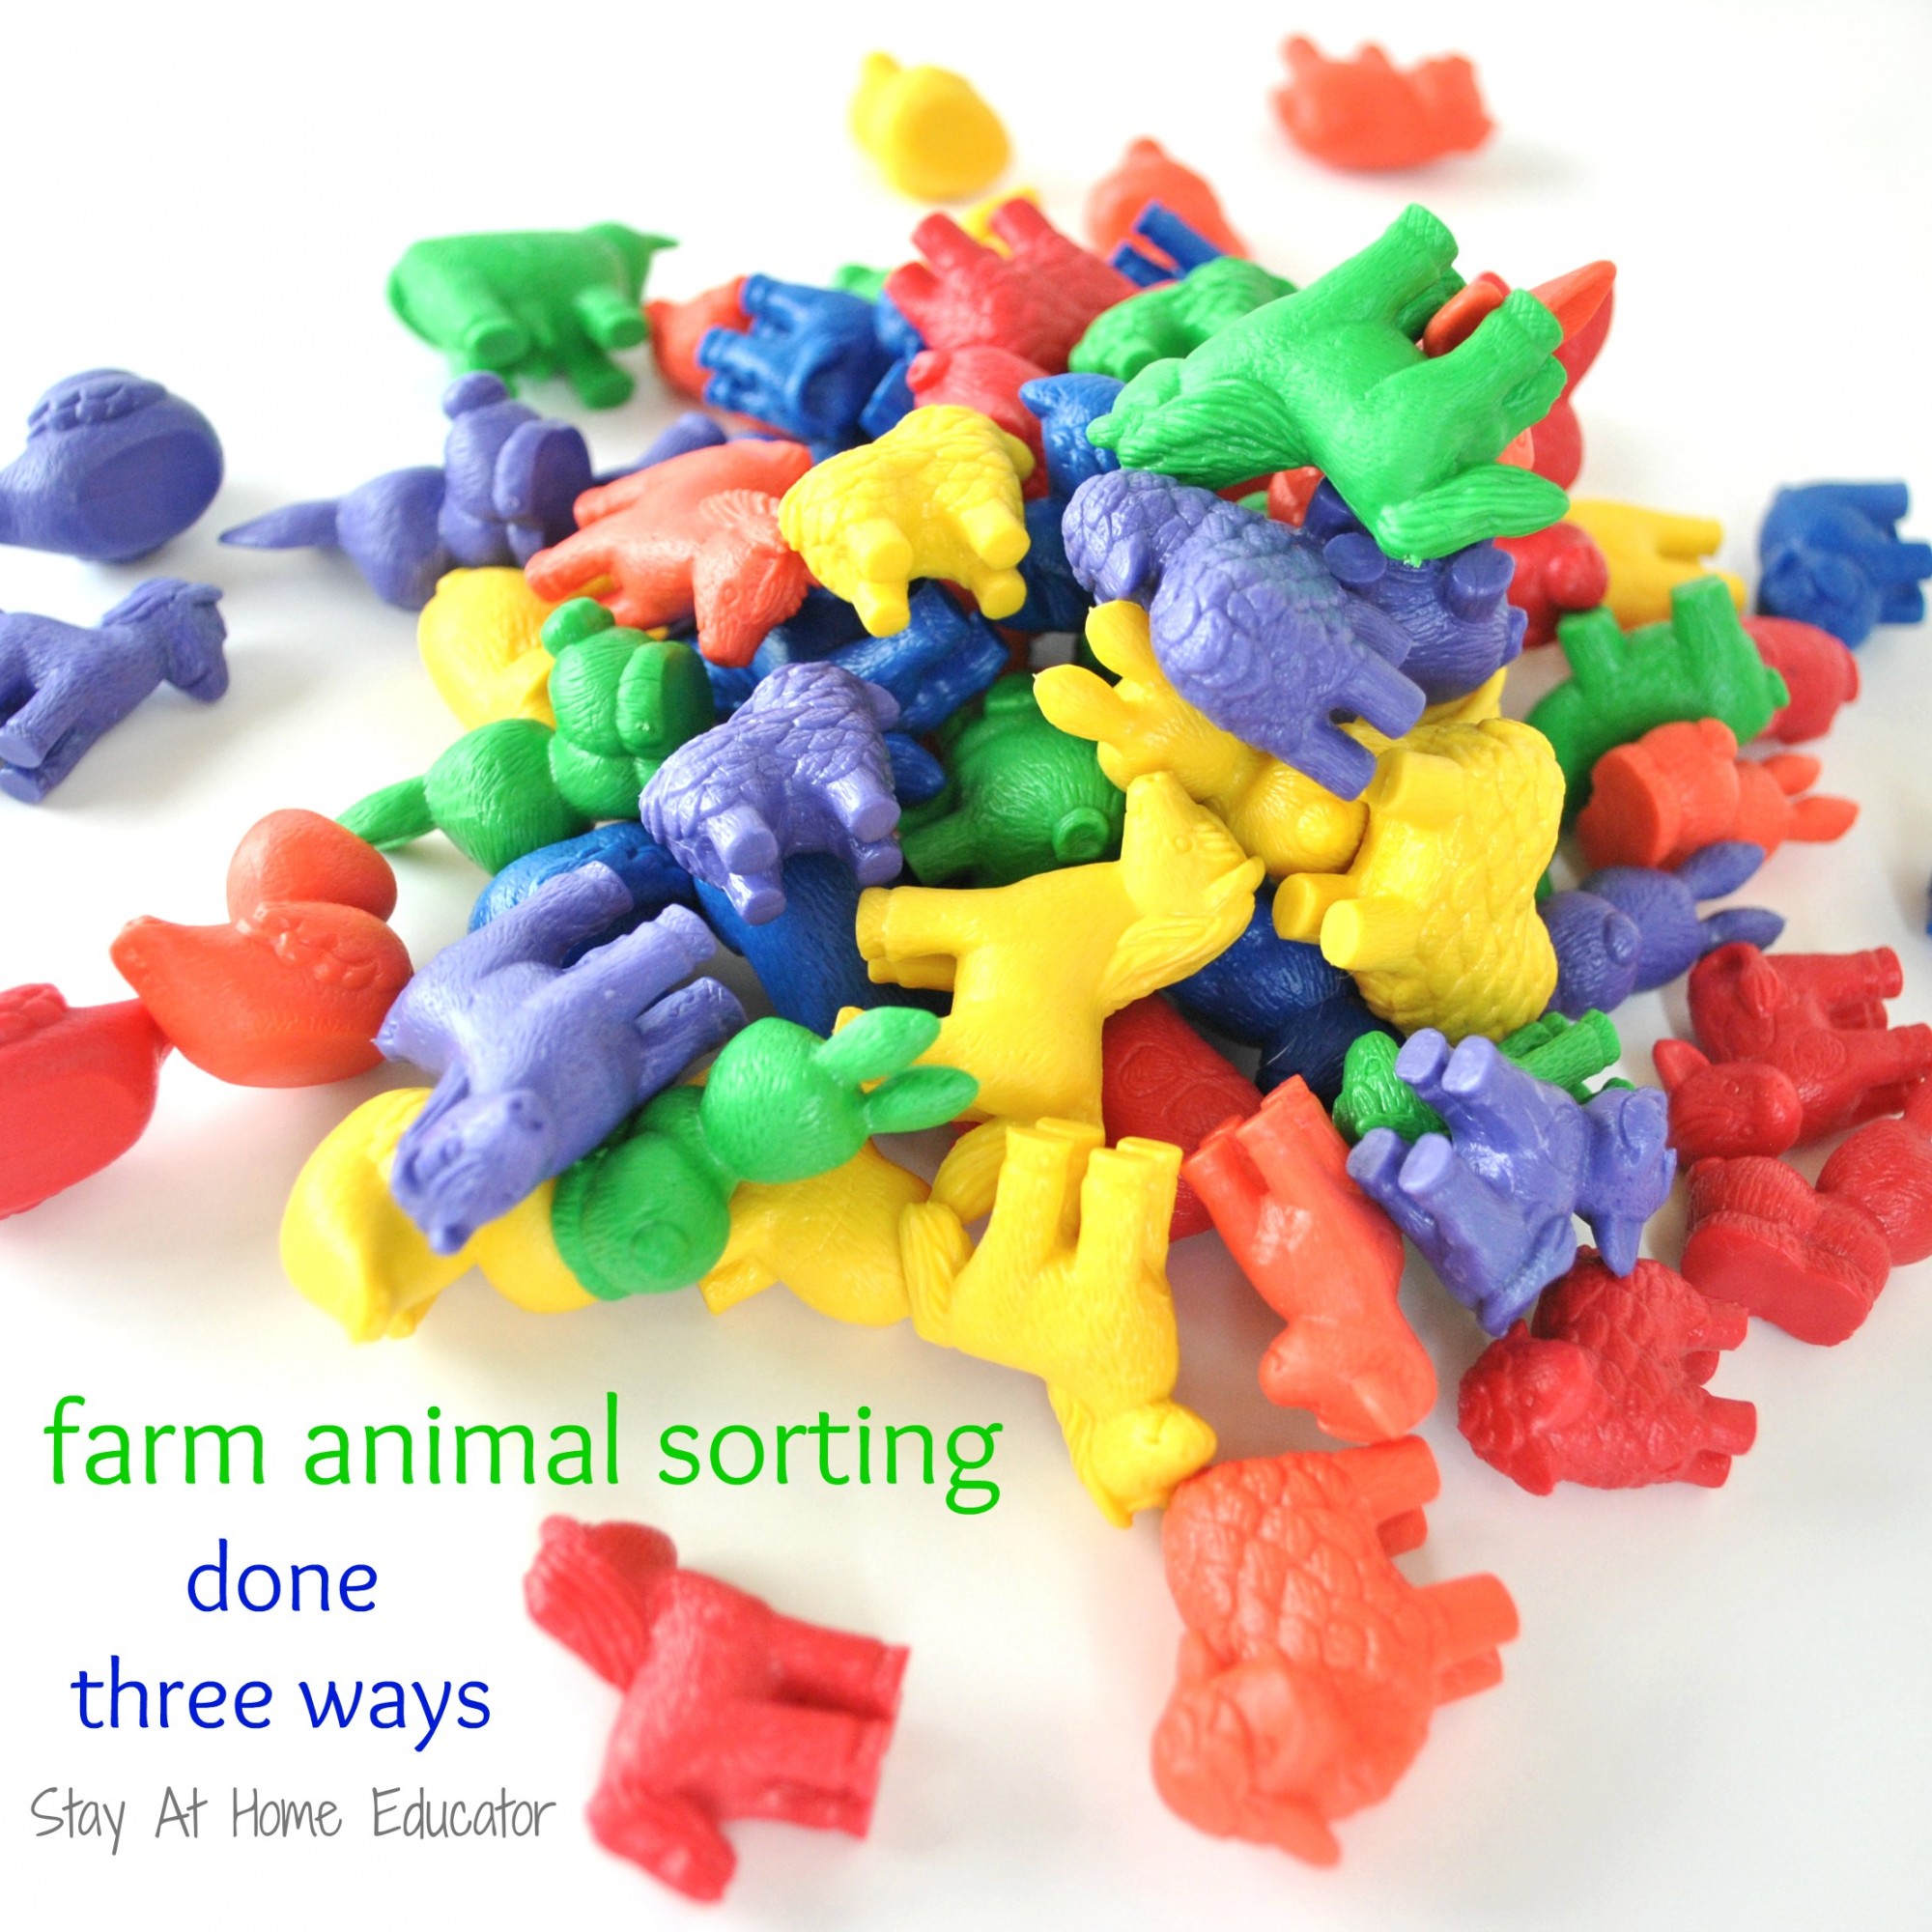 Farm animal sorting done three ways - Stay At Home Educator